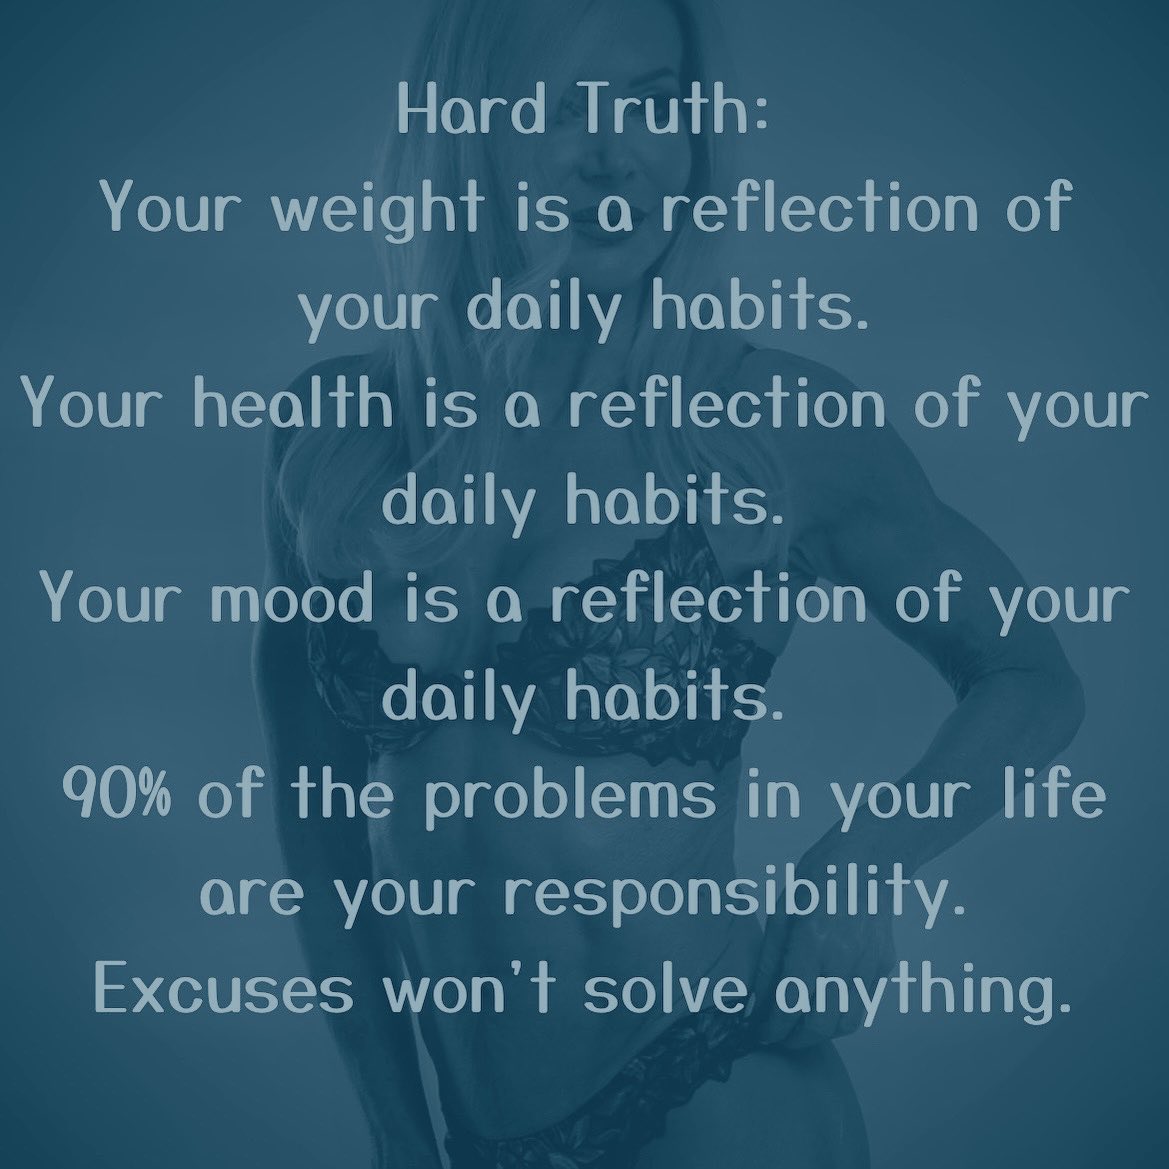 #responsibility #habits #healthyhabits #accountability #commitment #dothework #discipline #daily #hard #hardtruth #selfmastery #motivation #fitness #mindset #weightloss #weightlossjourney #fit @healthfitness3687